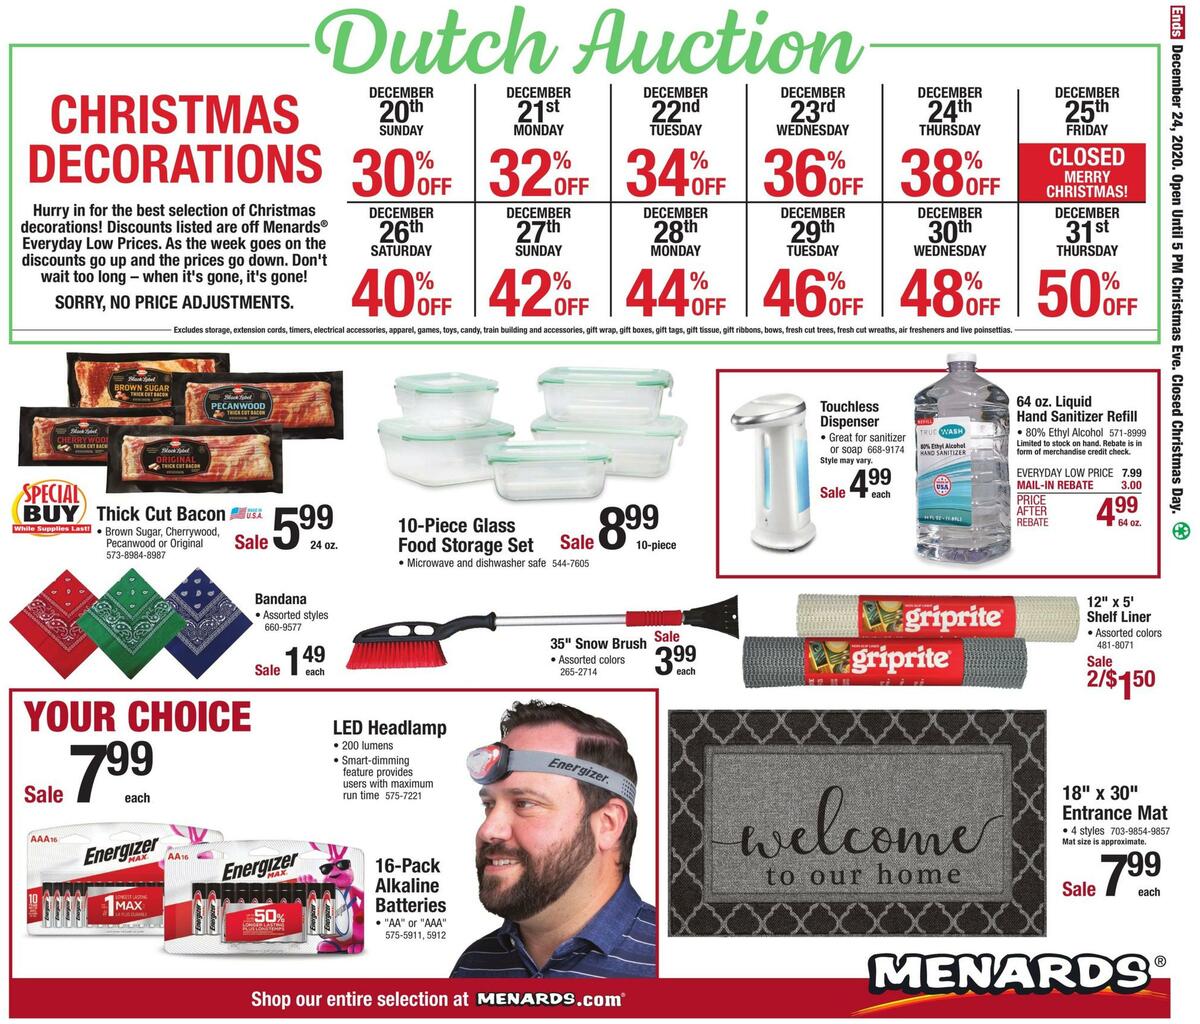 Menards Last Minute Gift Sale Weekly Ad from December 15